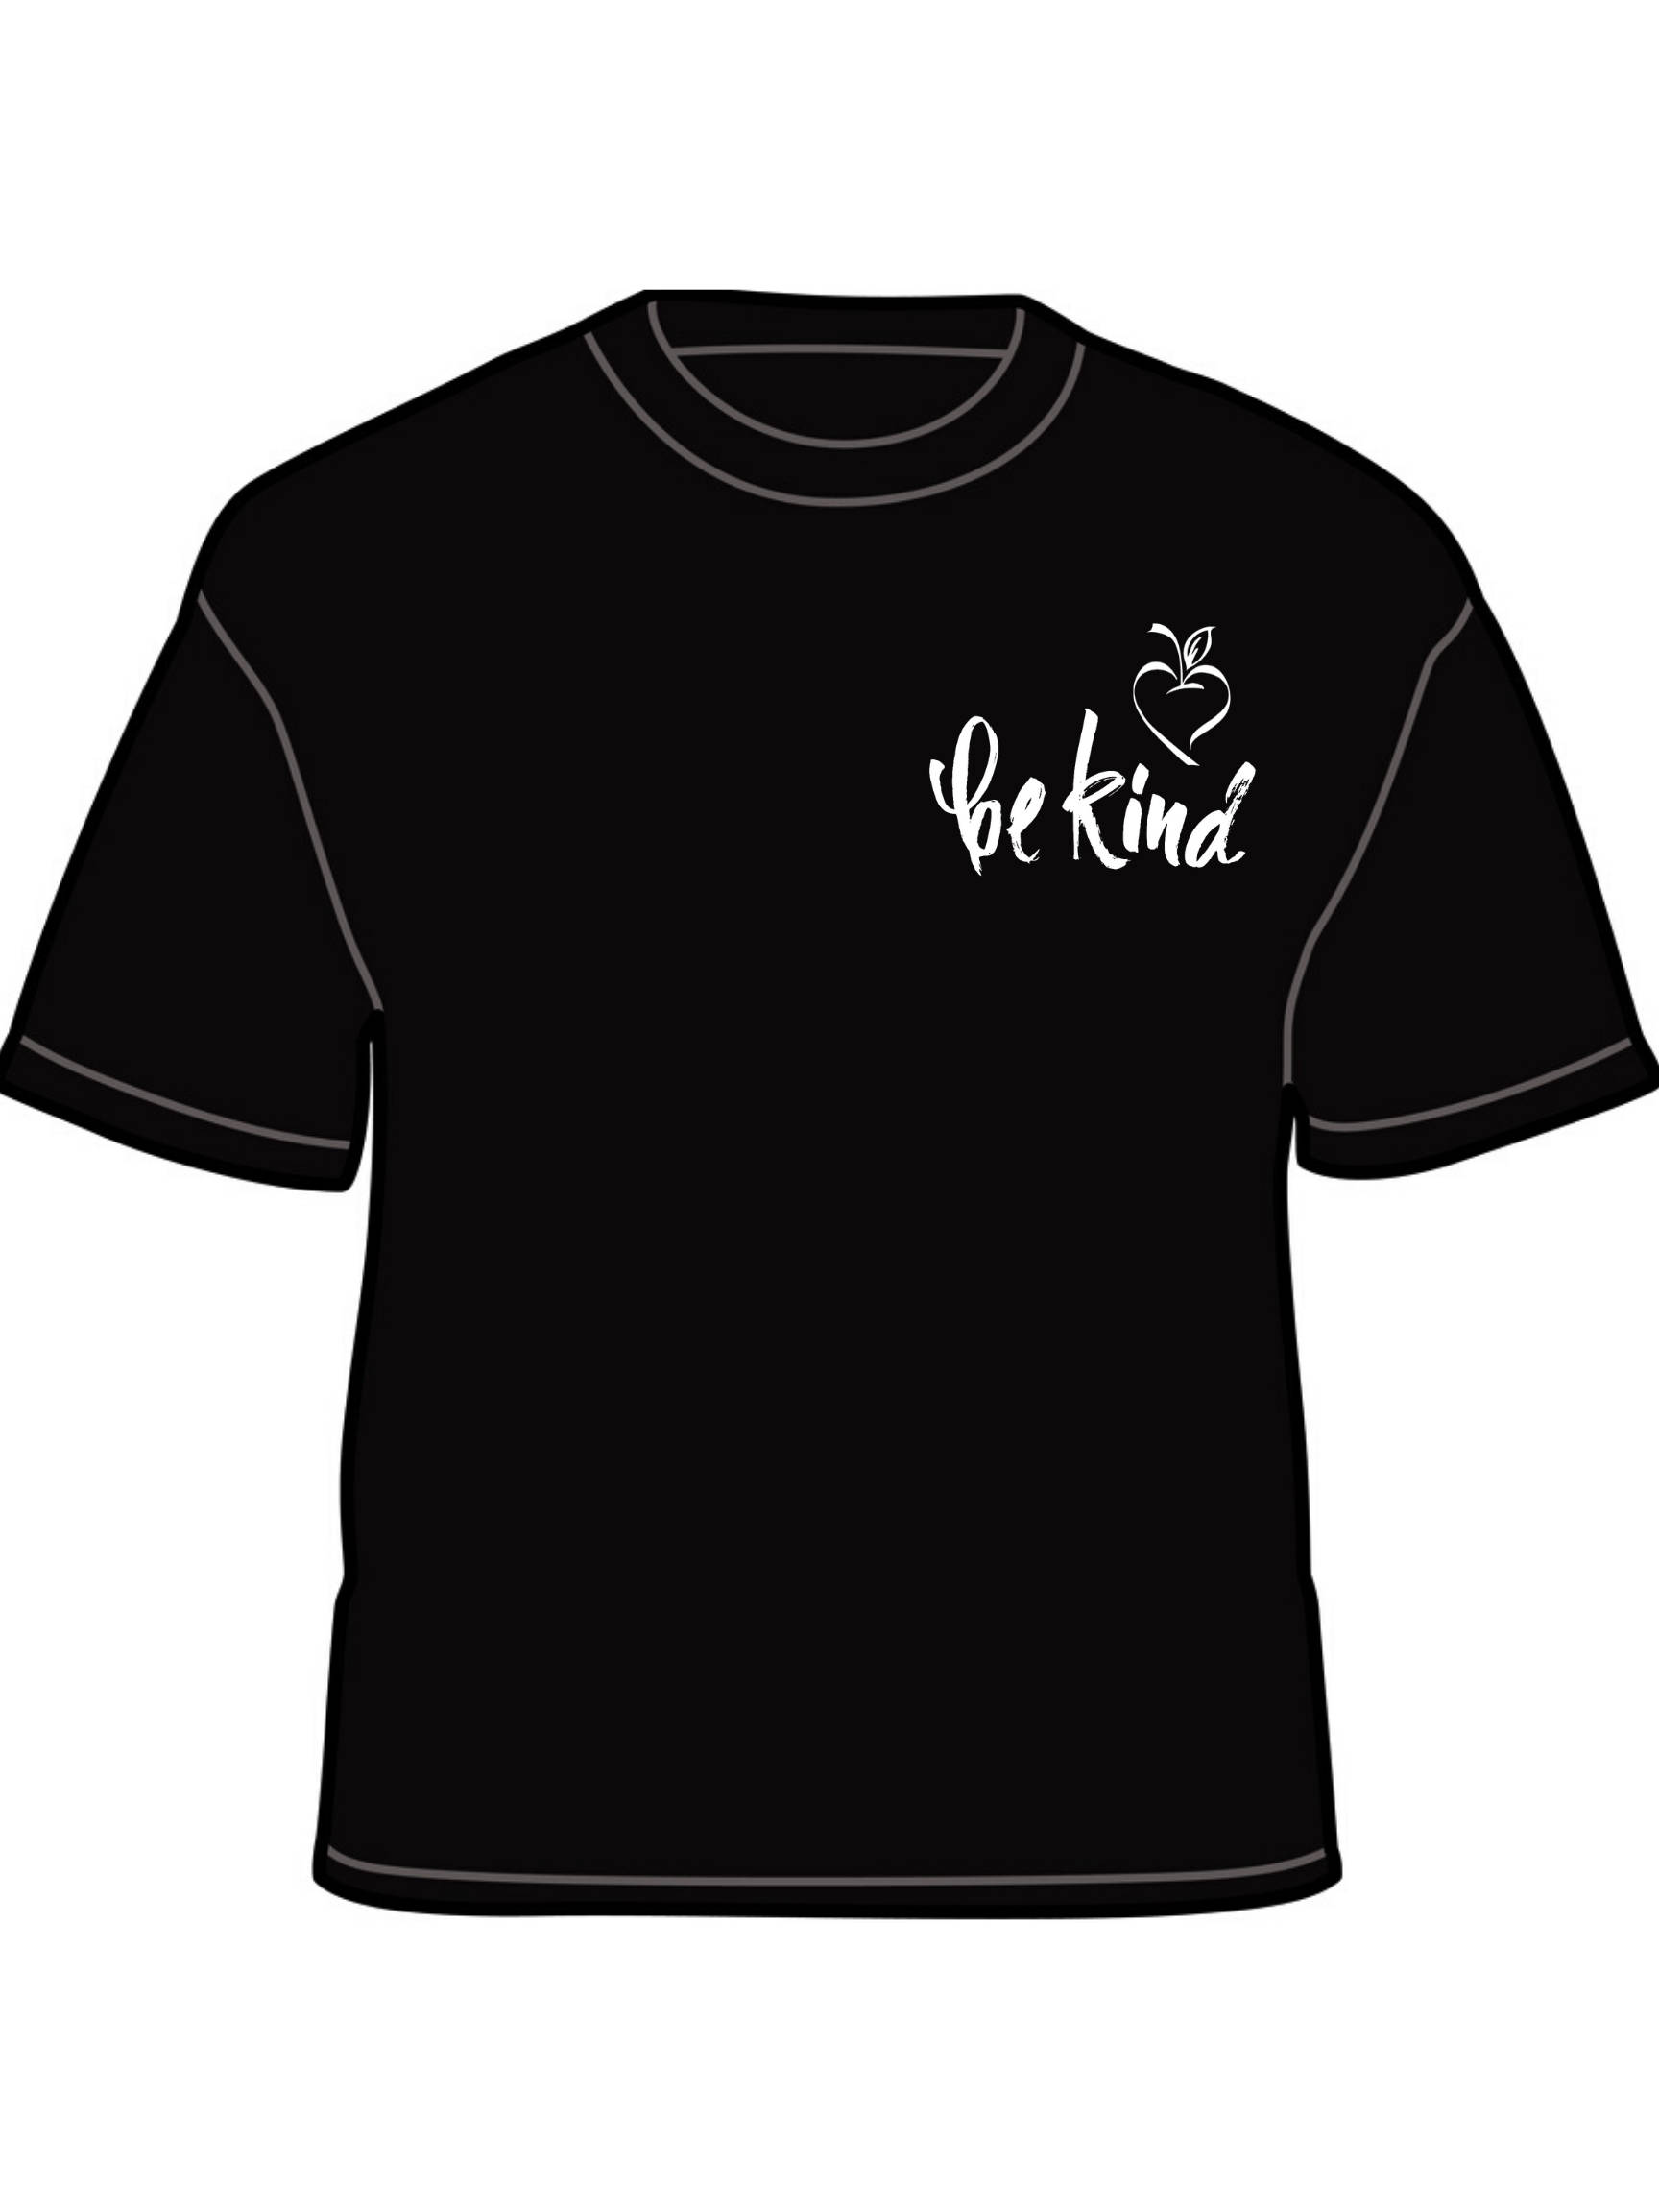 22434317_web1_200817-LAT-School-Kindness-Shirts-tshirt_1